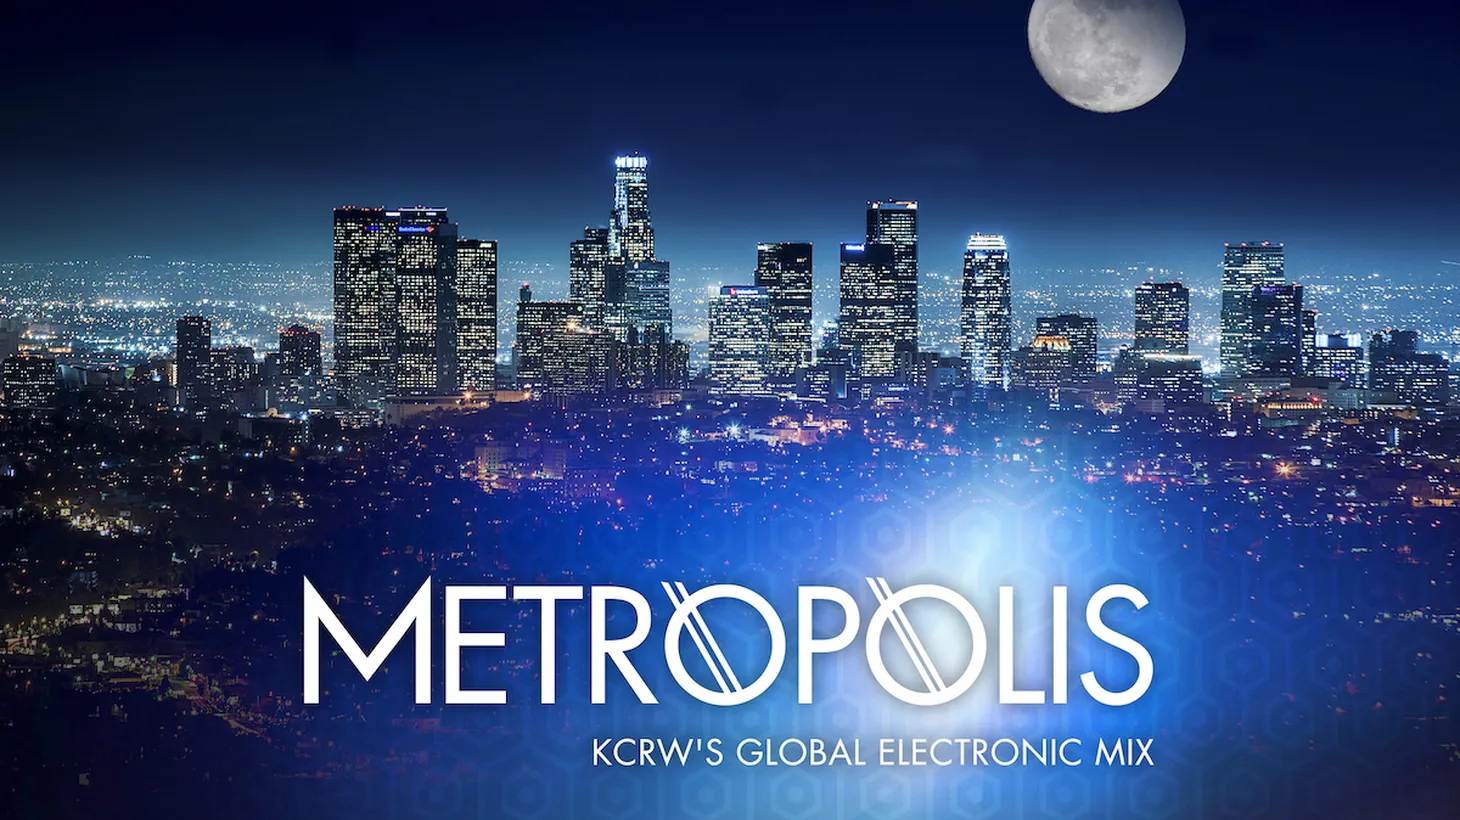 Metropolis playlist, November 21, 2020.